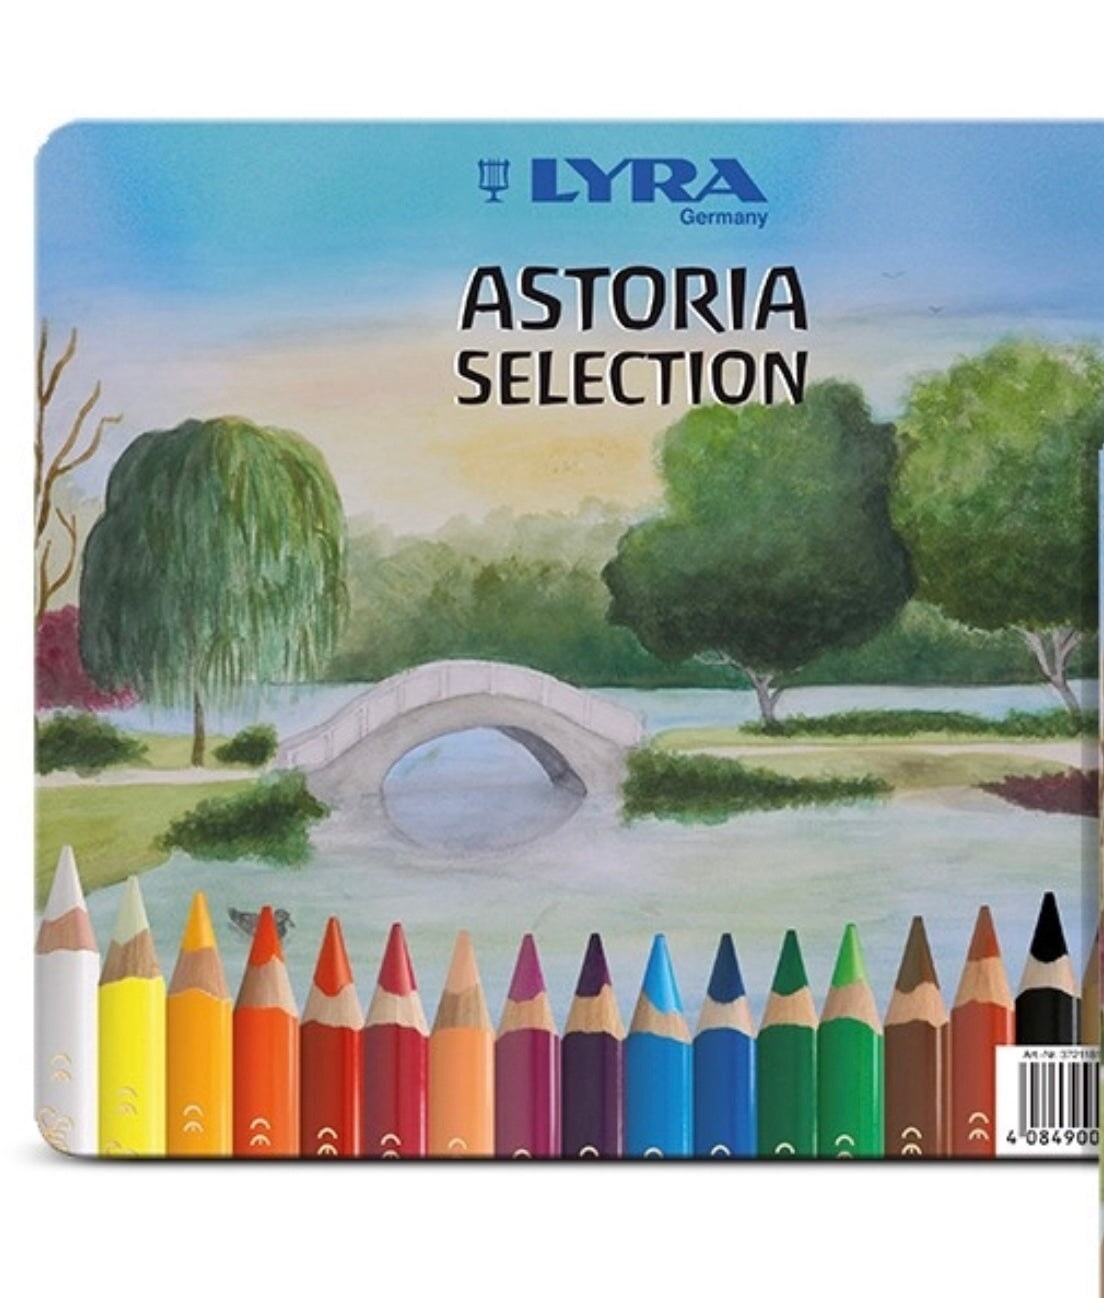 Lyra Astoria Selection Super Ferby, 18 Count, Tin - Alder & Alouette